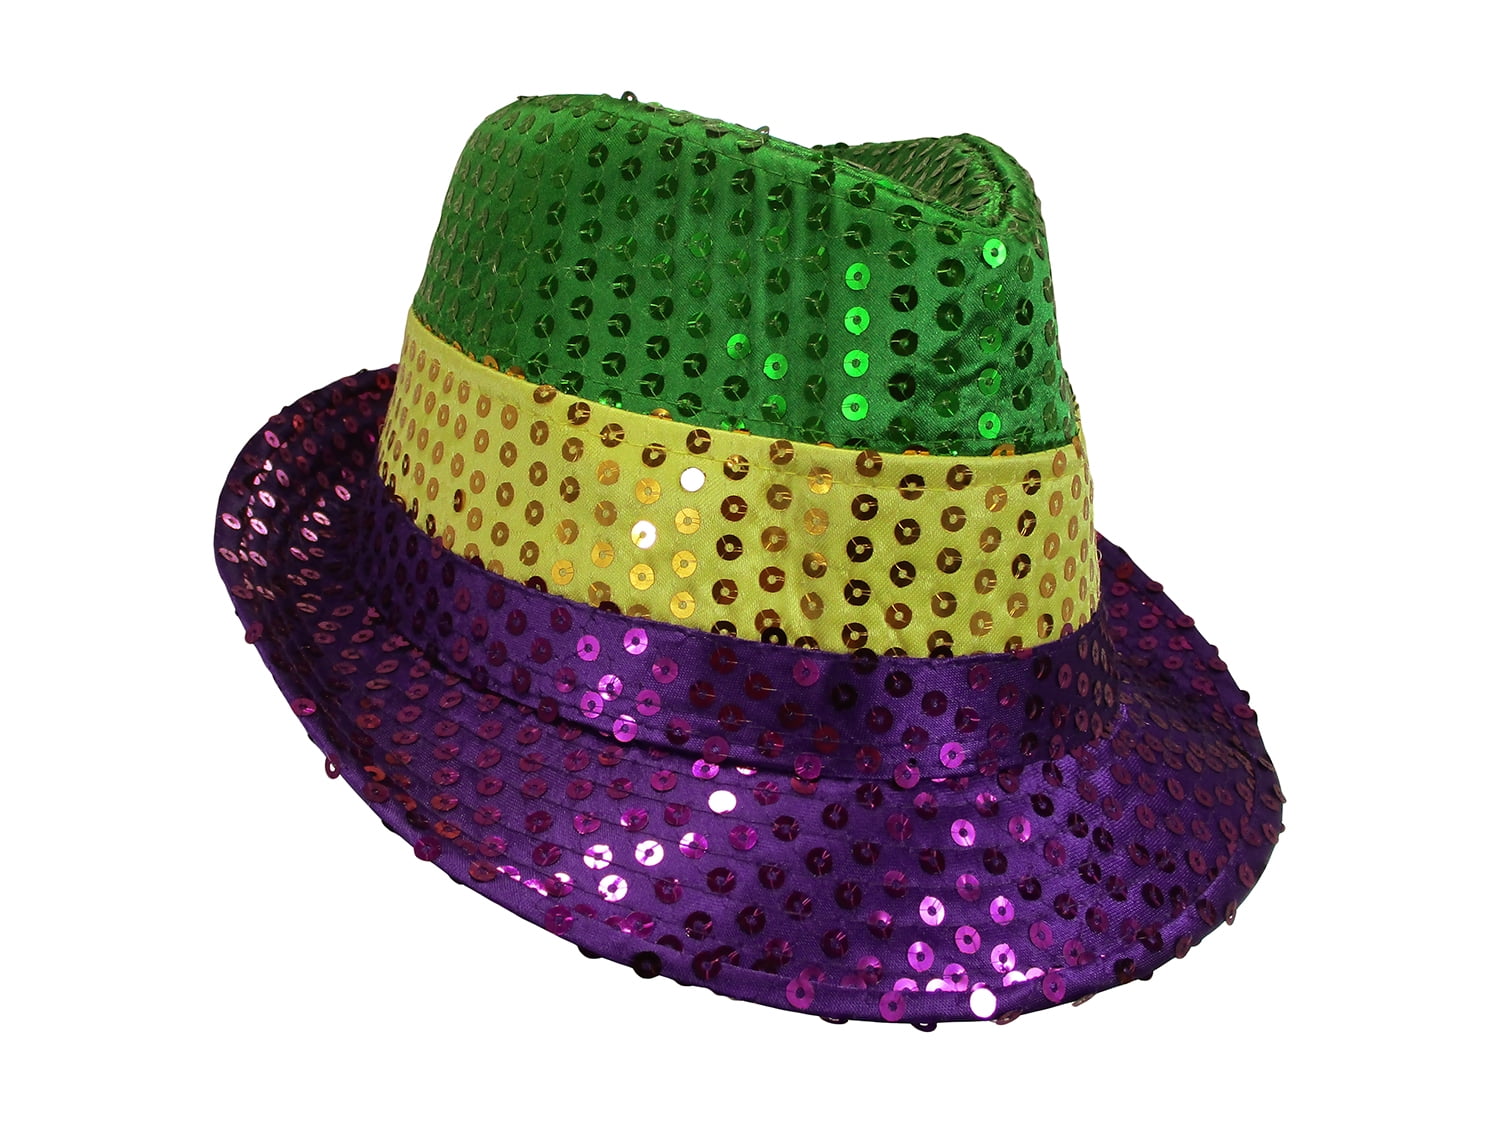 Unisex Light Up Sequin Mardi Gras Green Purple Yellow Cowboy Hat Western Costume